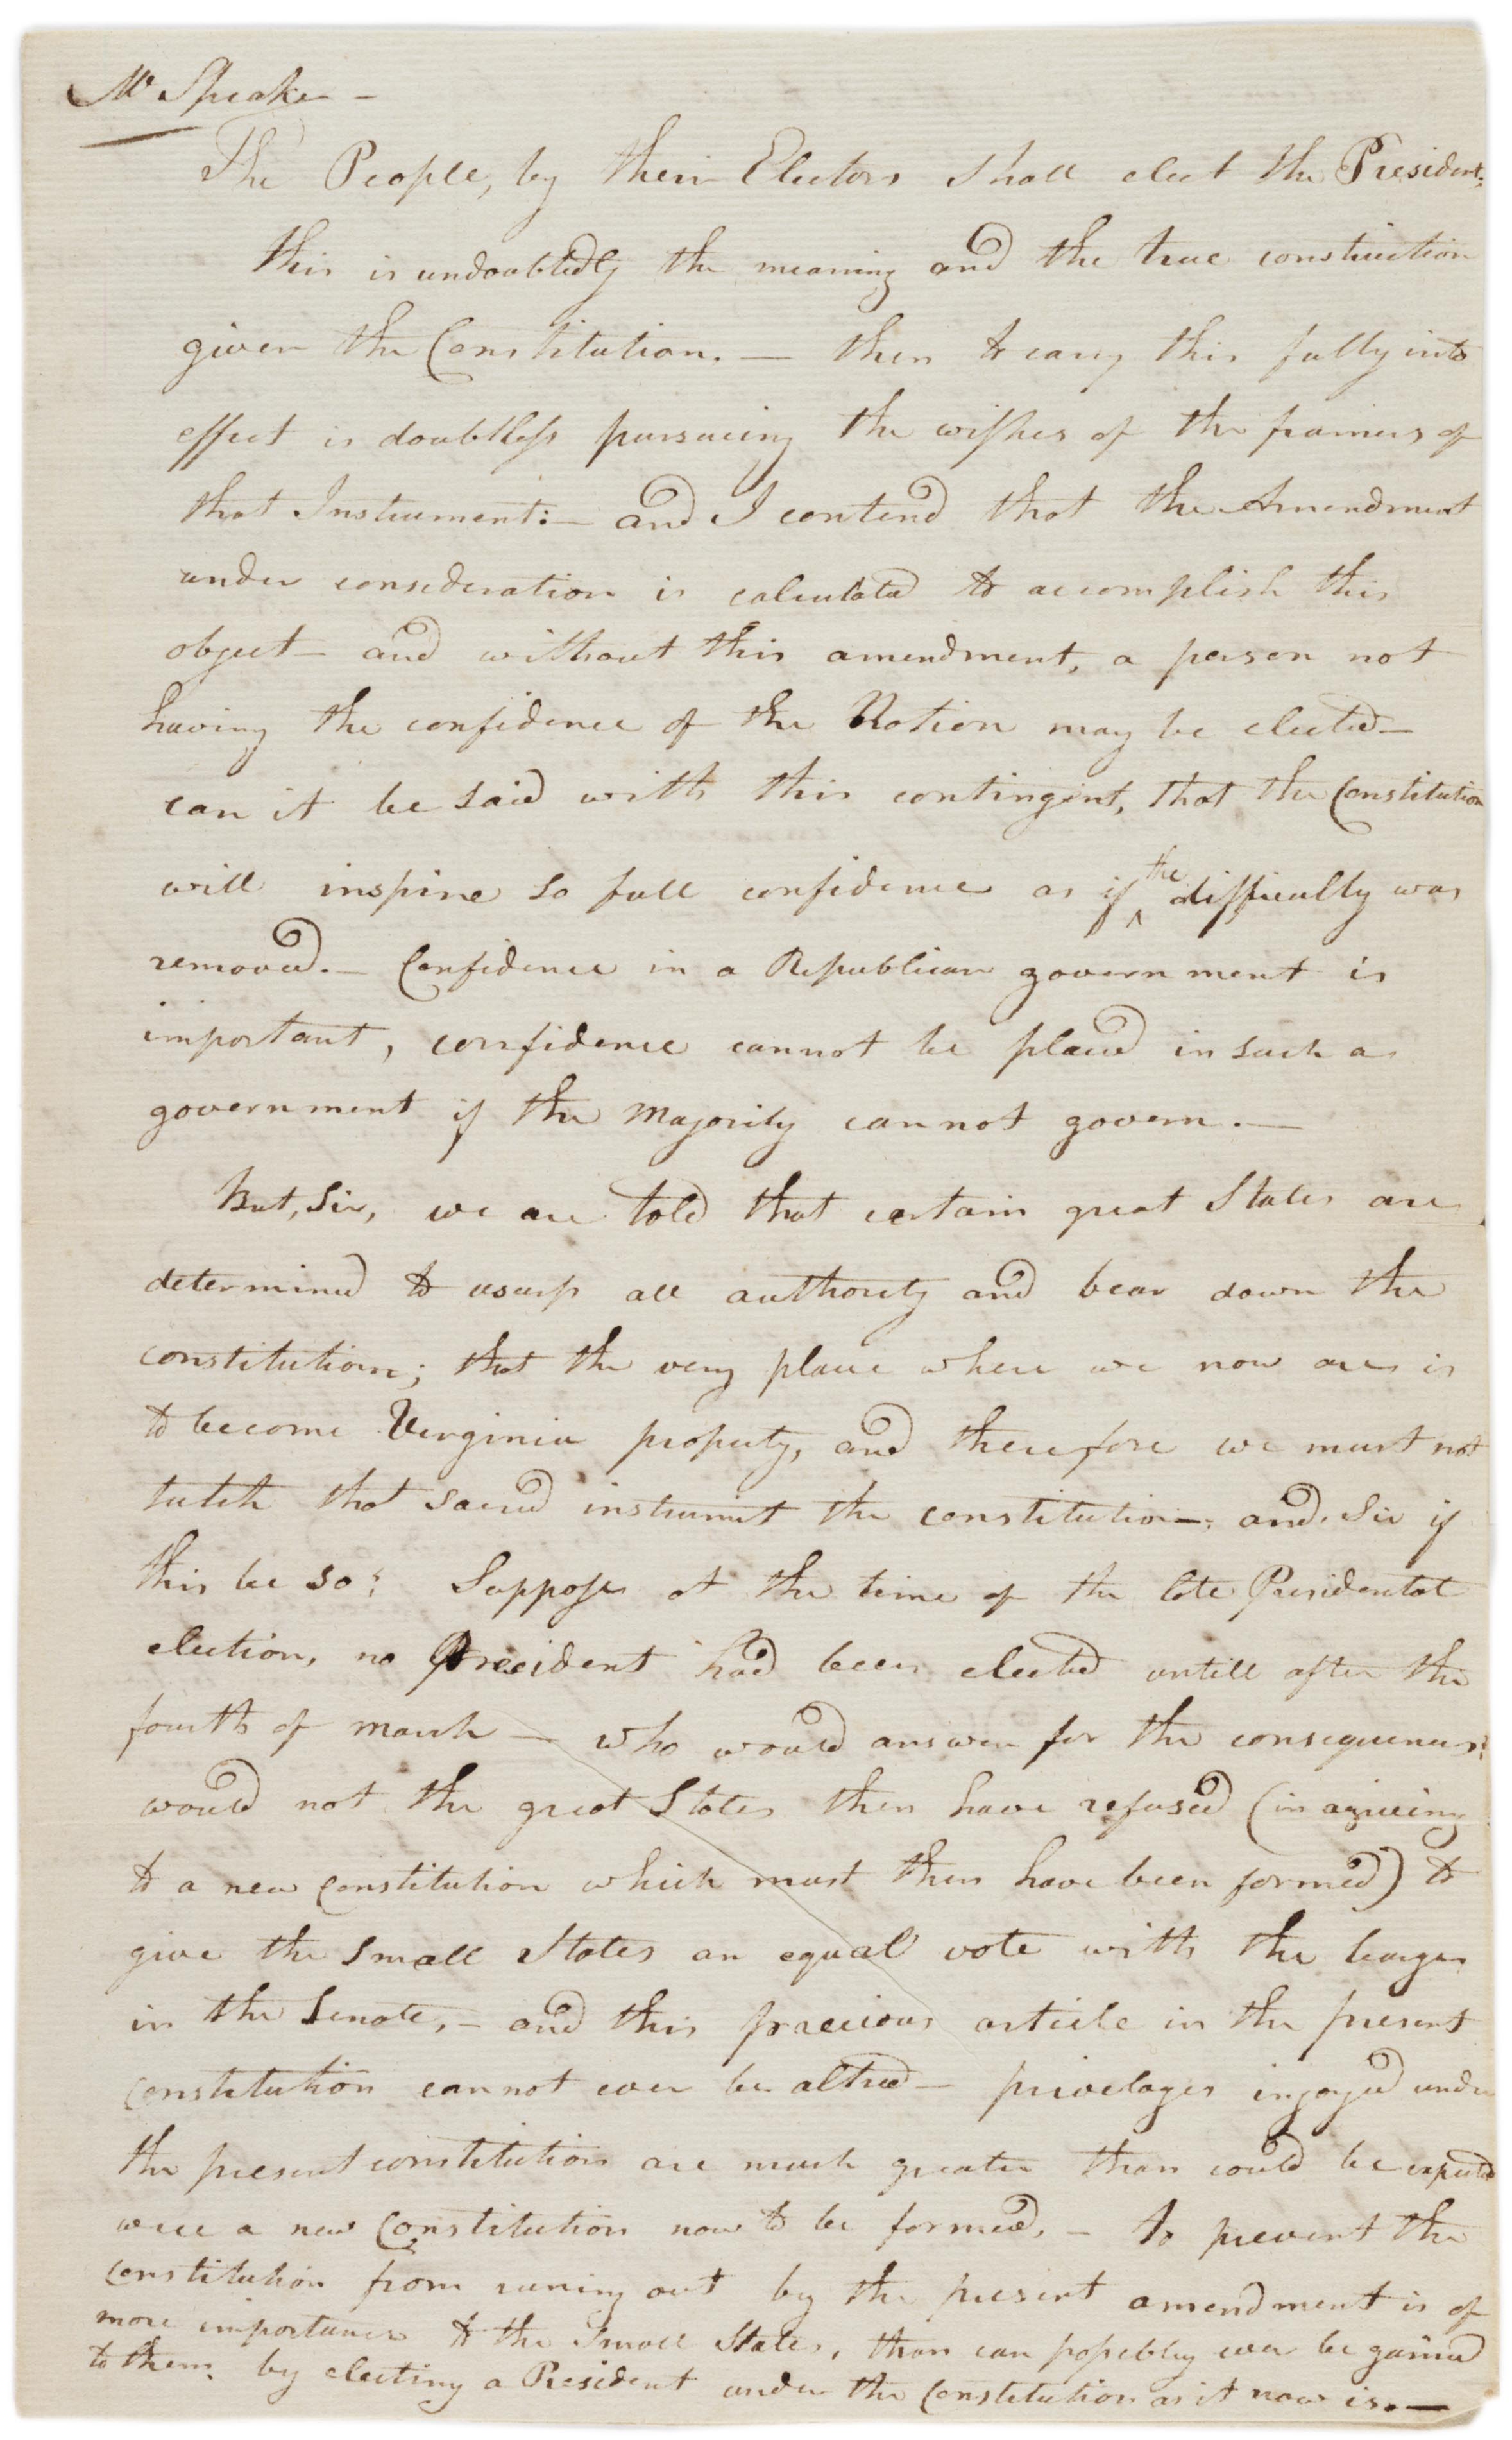 Speech in favor of the Twelfth Amendment, 1803